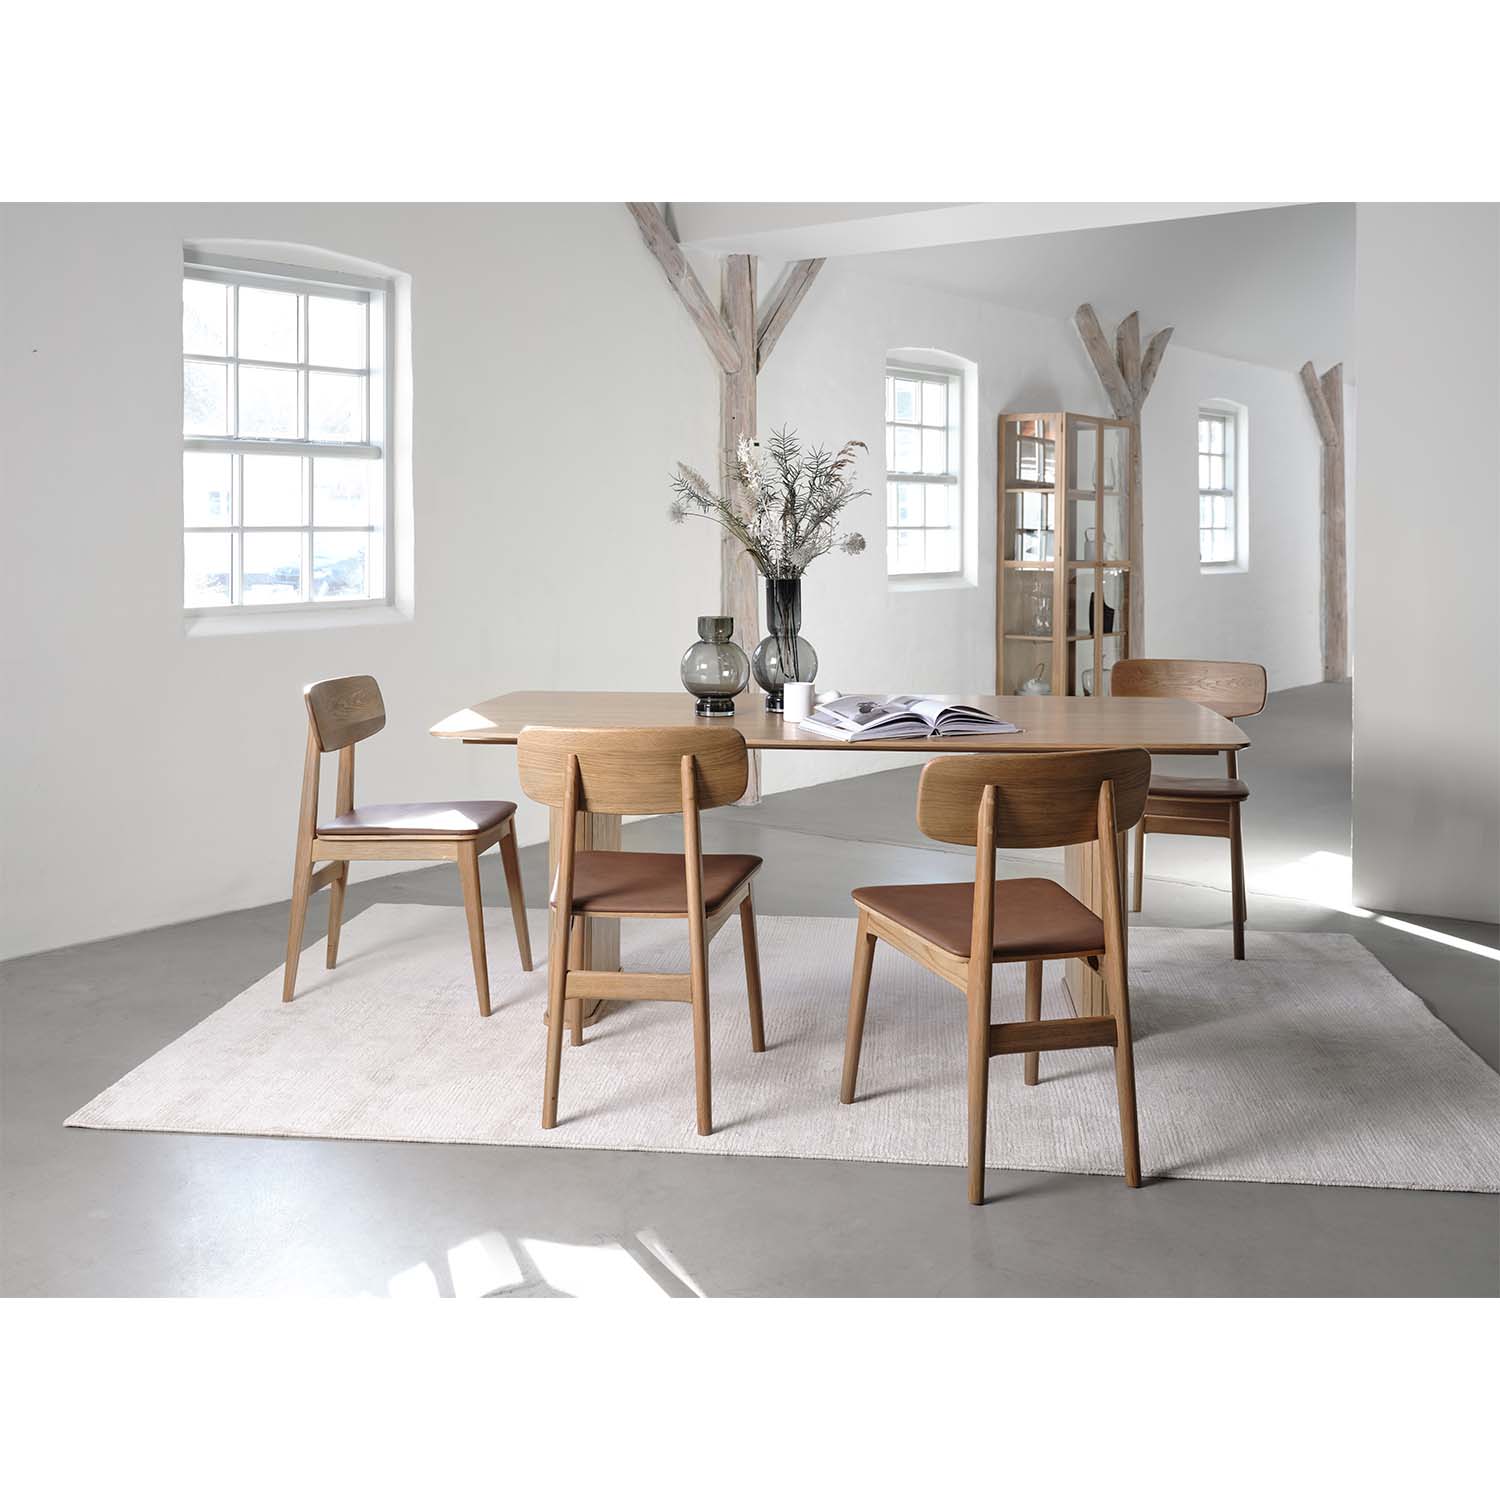 Balo spisebordsstol, Eg/PU læder - Møbelkompagniet